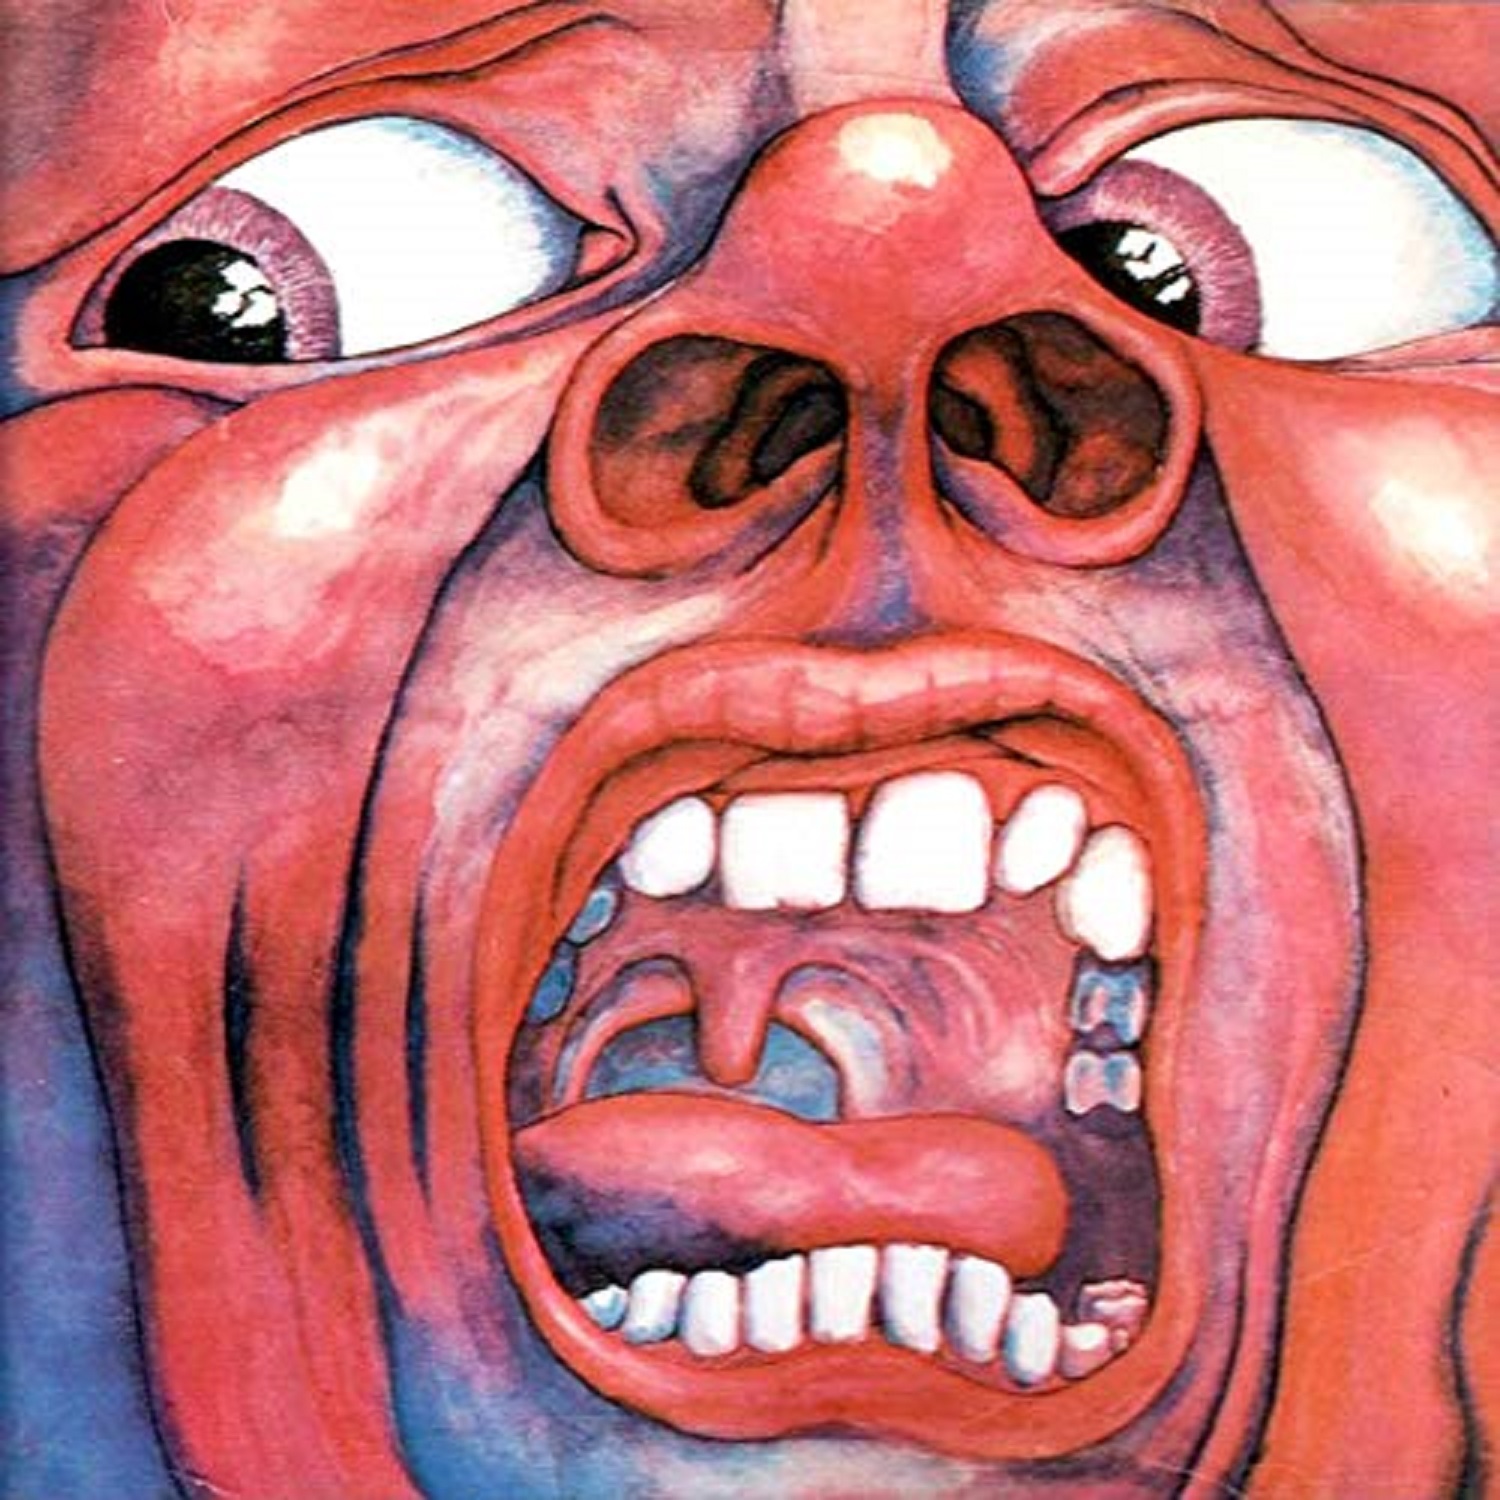 Robert Fripp: The Wizard Behind King Crimson's Sonic Alchemy